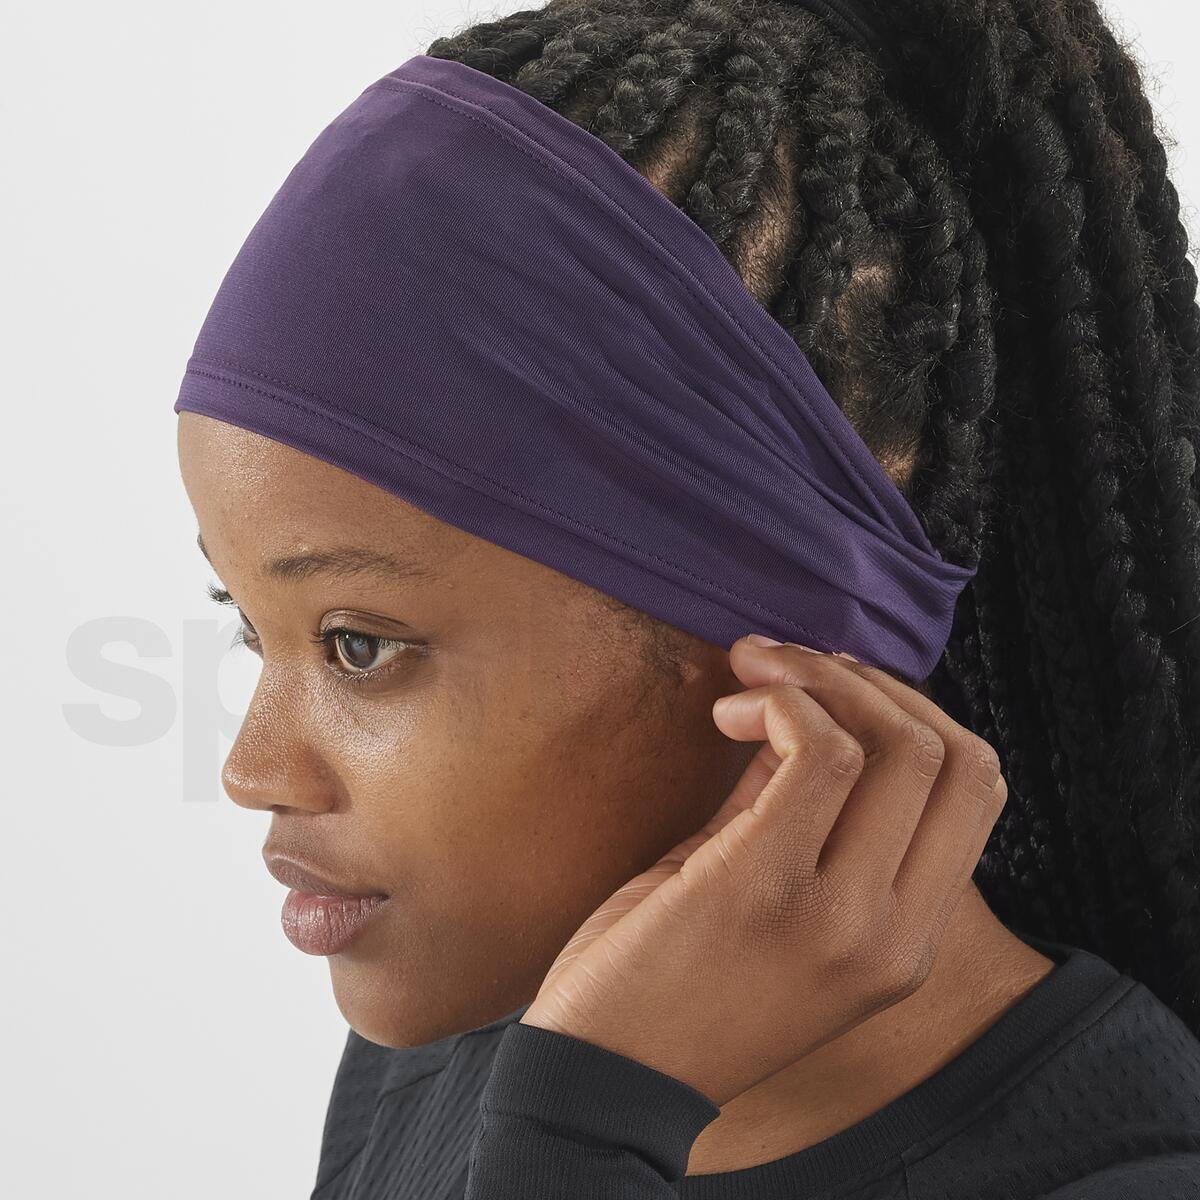 Čelenka Salomon Sense Headband - fialová